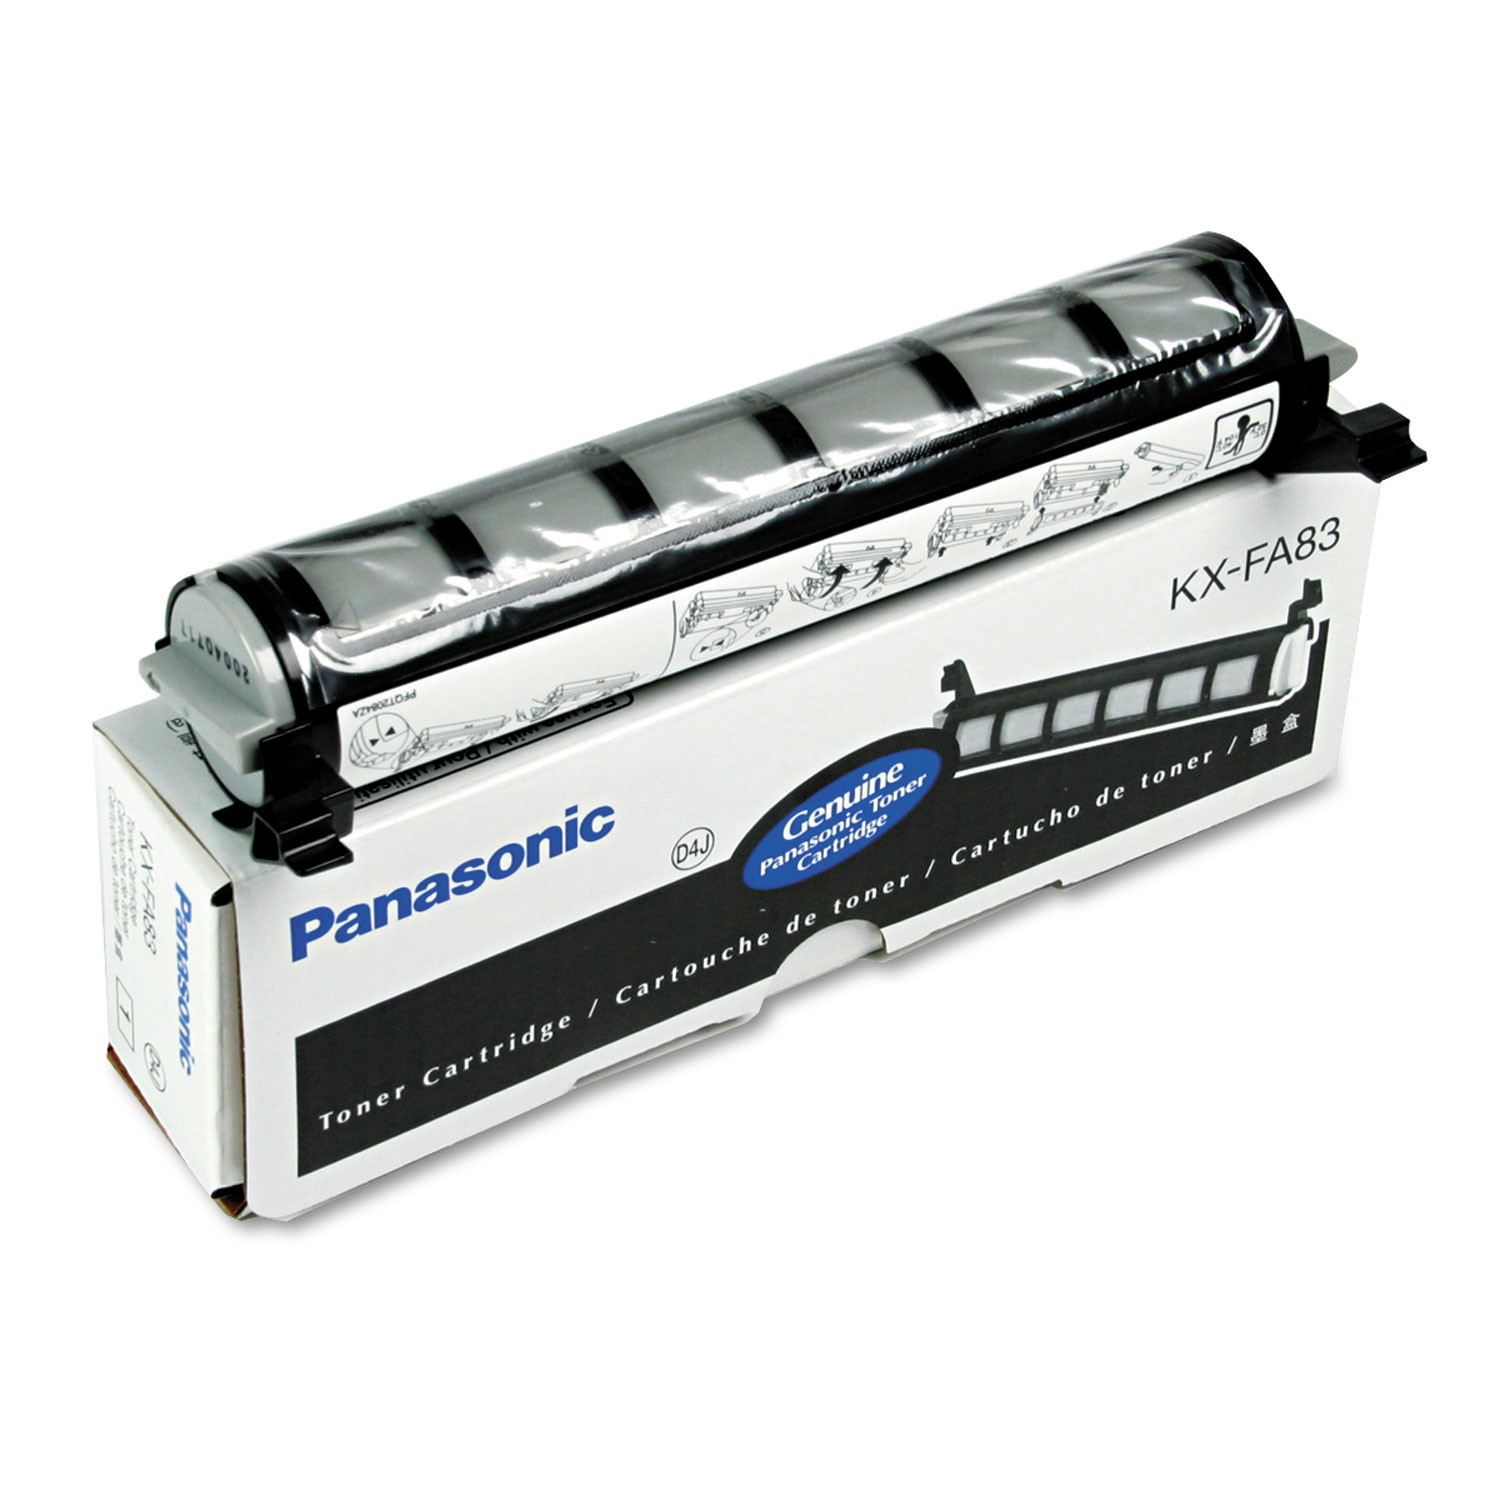  Panasonic KXFA83 KX-FA83 Toner, 2500 Page-Yield, Black (PANKXFA83) 